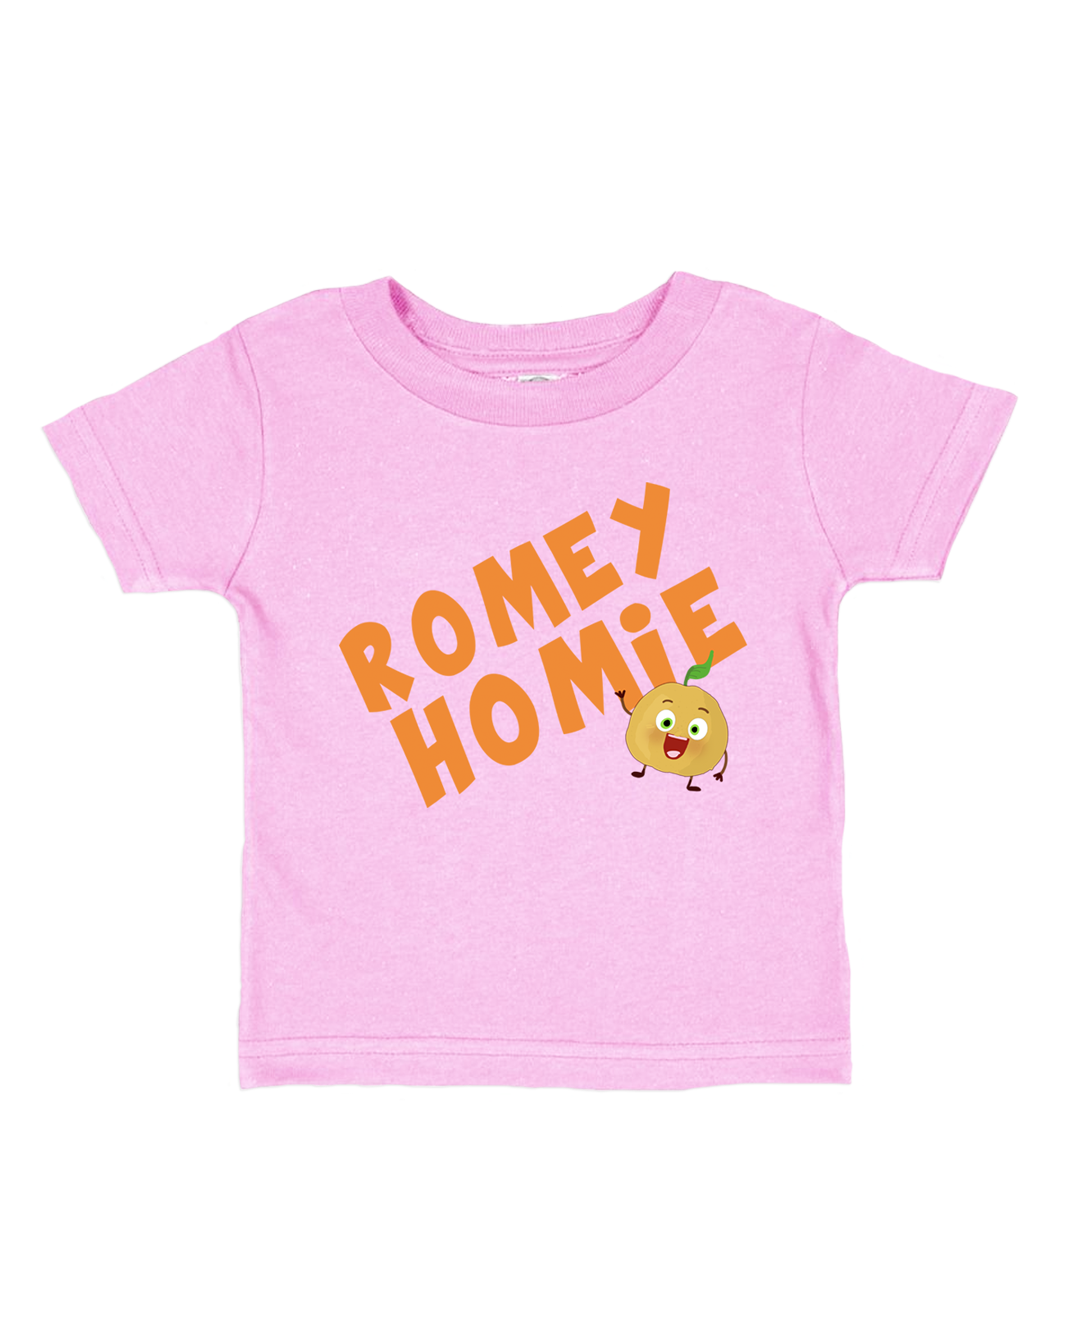 Romey Homie Youth Tee (Pink)